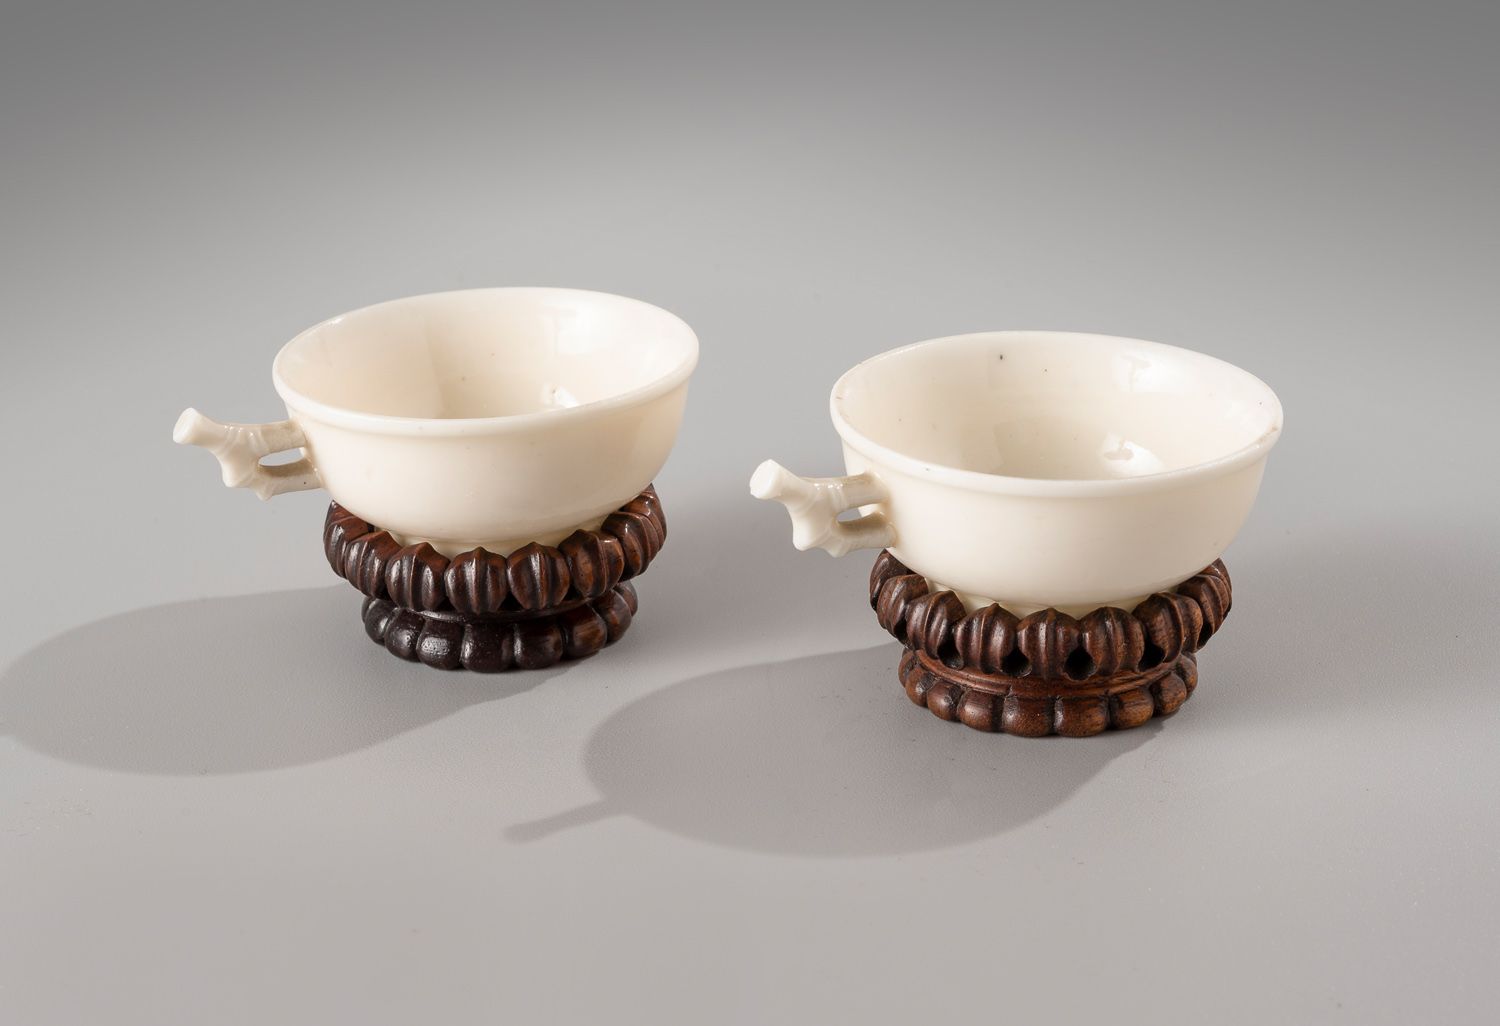 Null 中国，康熙时期，18世纪

一对中国白的小茶杯，手柄

竹子形状的手柄。

最大直径7.7厘米

(边缘有非常轻微的磨损)